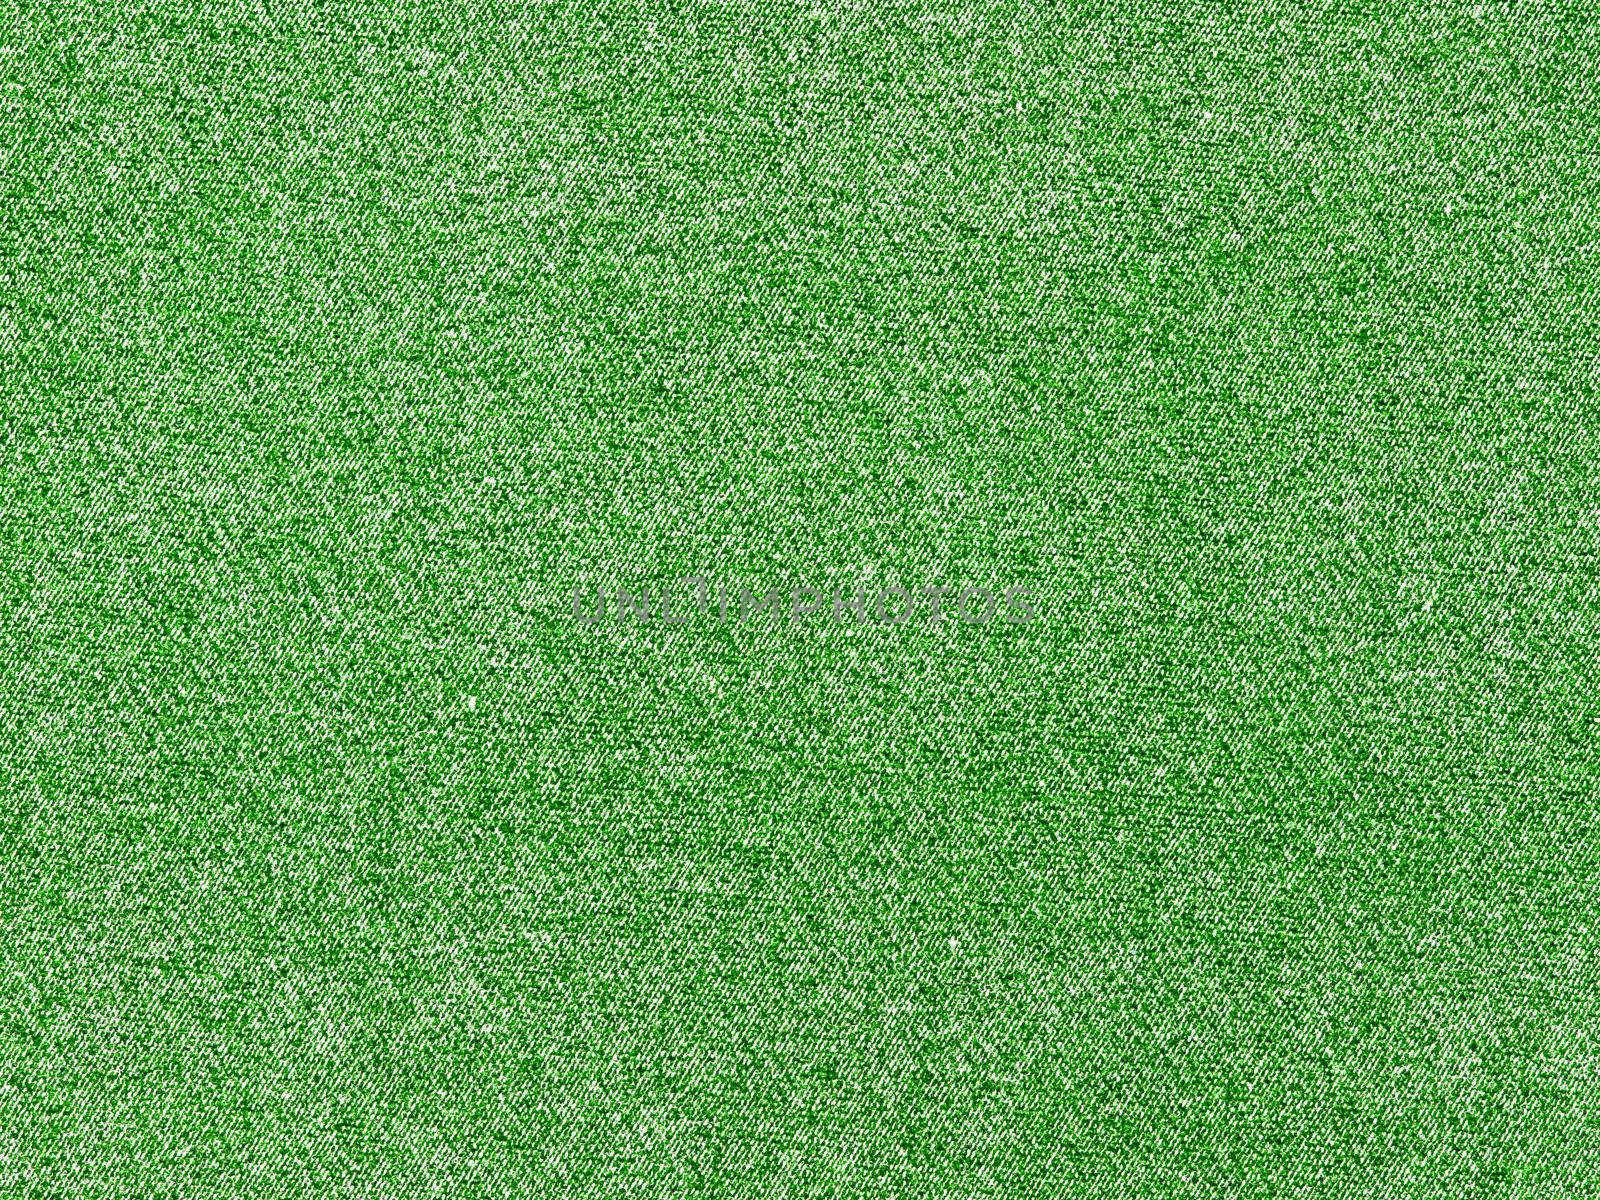 Full Frame Background of a Green Denim Fabric Pattern by Frankljunior